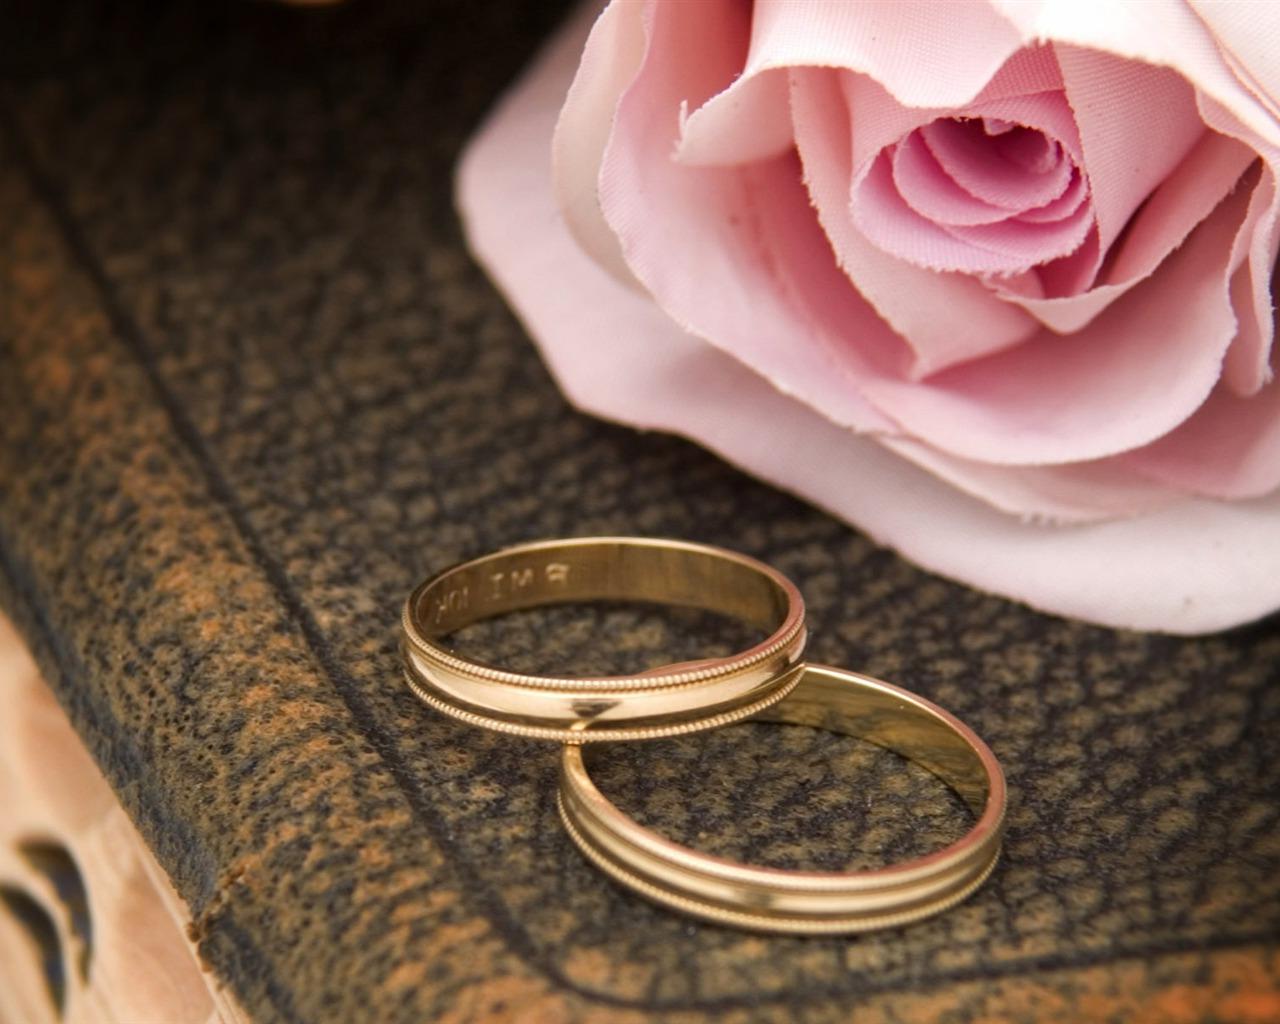 Weddings and wedding ring